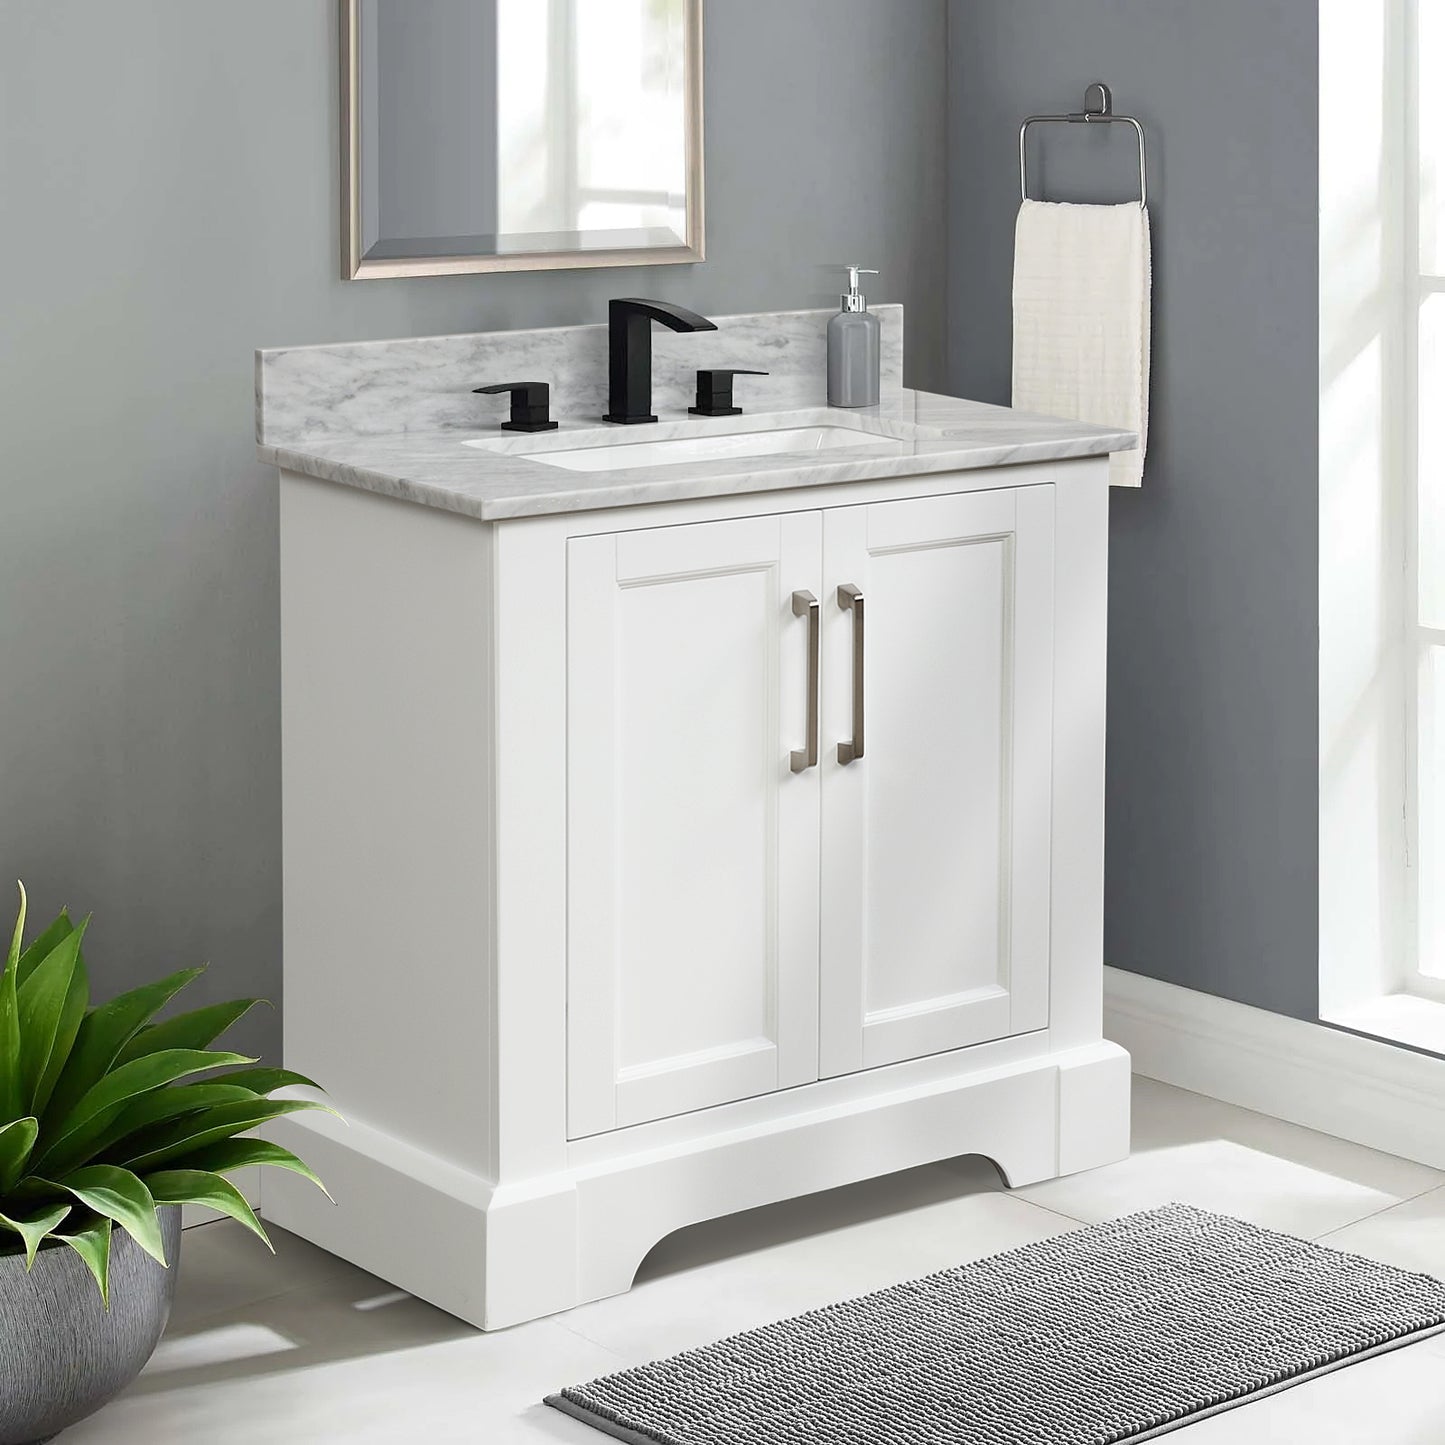 30 inch single solid wood bathroom vanity set, with drawers